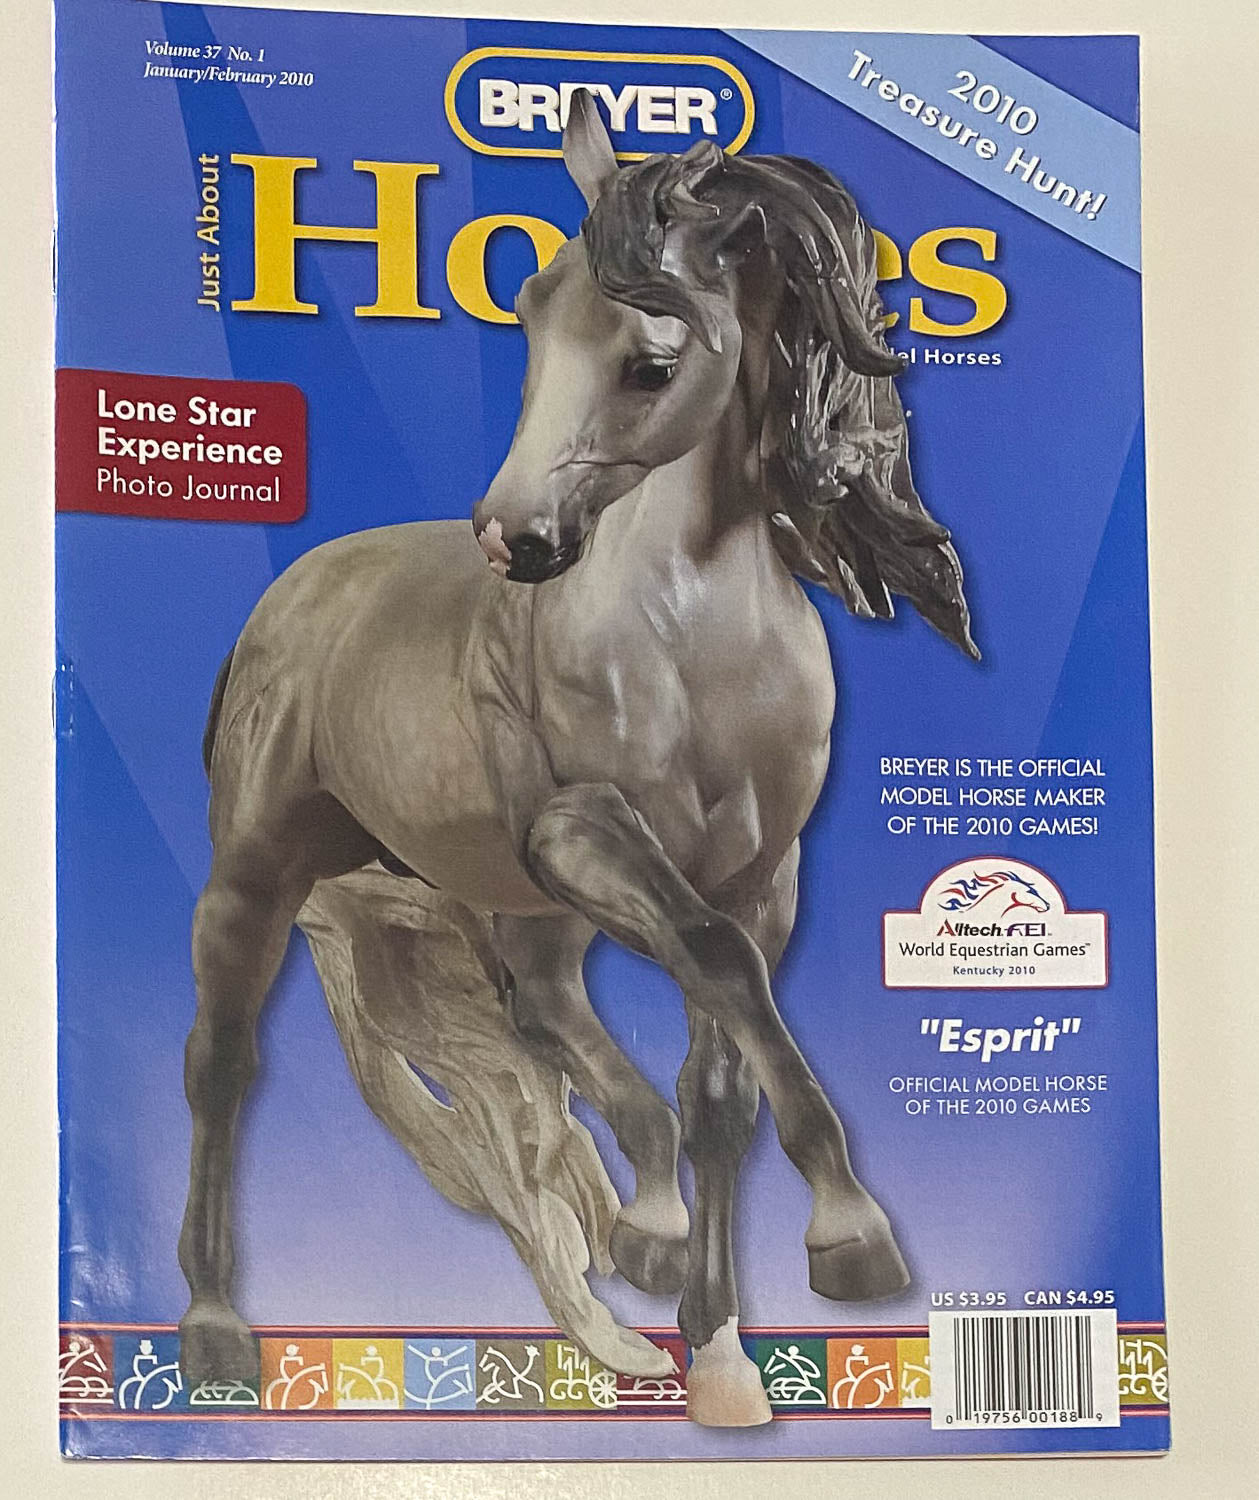 Just About Horses Magazine Vol. 37, No. 1, 2010 Jan/Feb